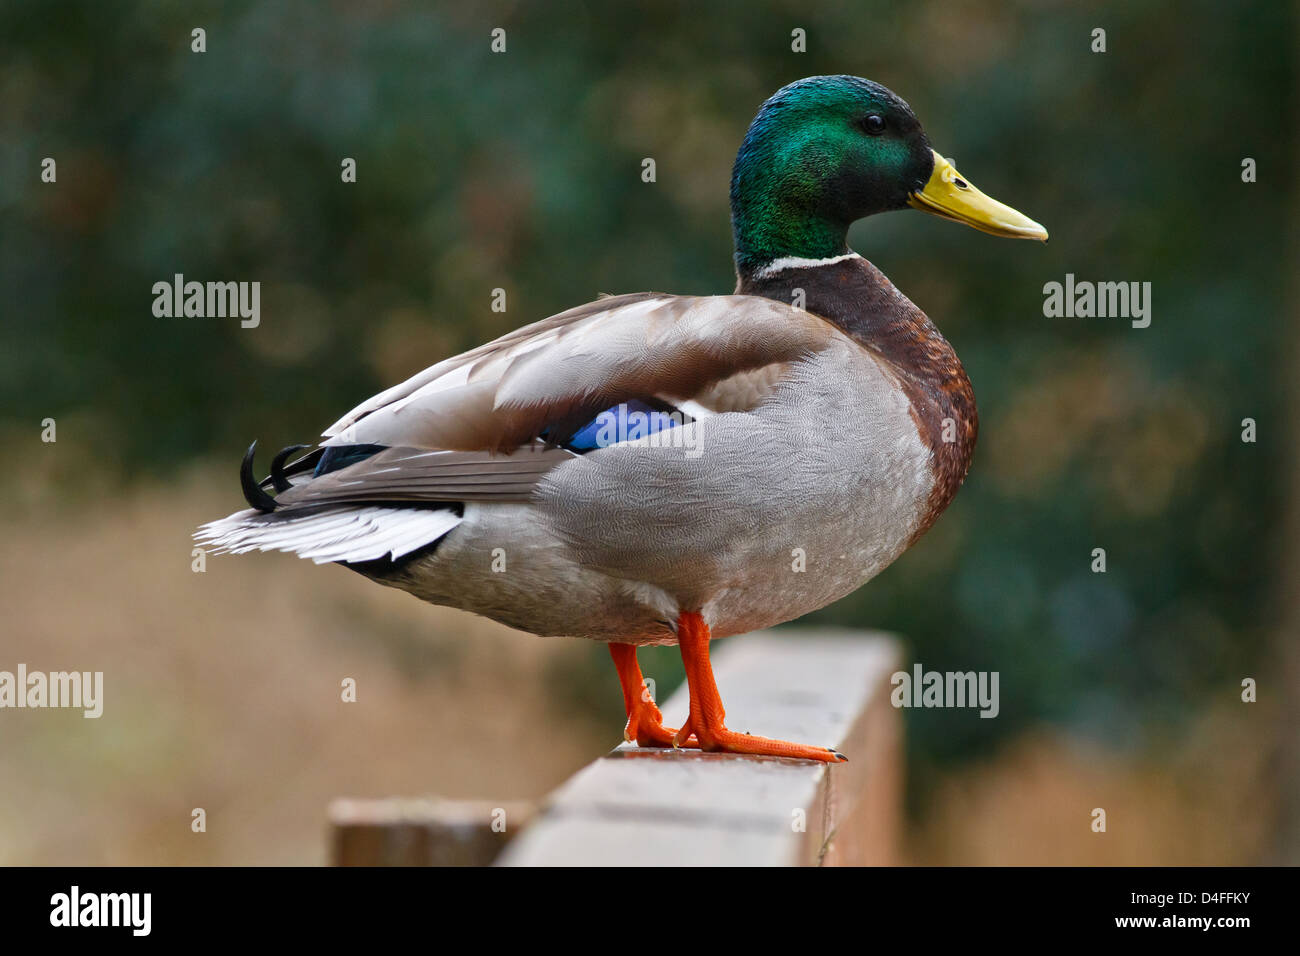 Male mallard duck standing on wooden railing with watchful eye Stock Photo